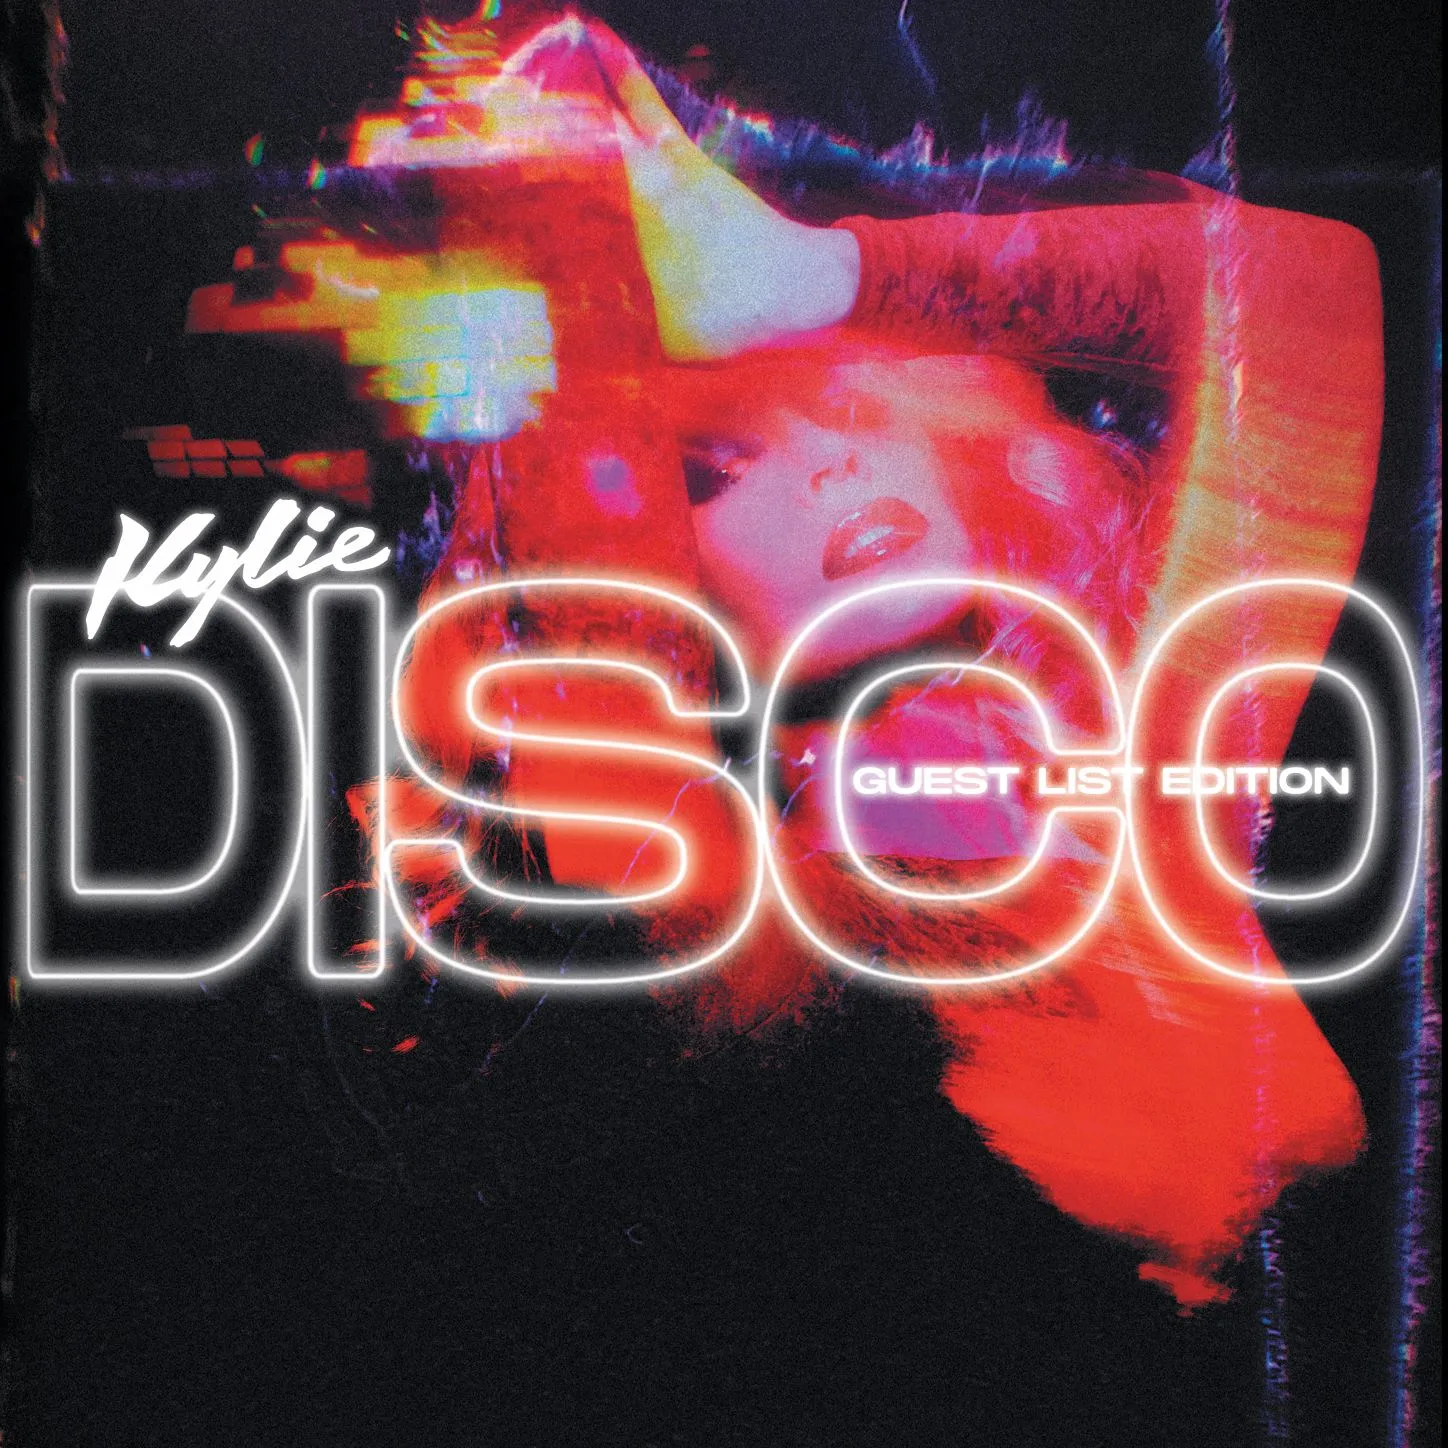 Kylie Minogue - Disco: Guest List Edition / Disco: Extended Mixes / Infinite Disco Live artwork